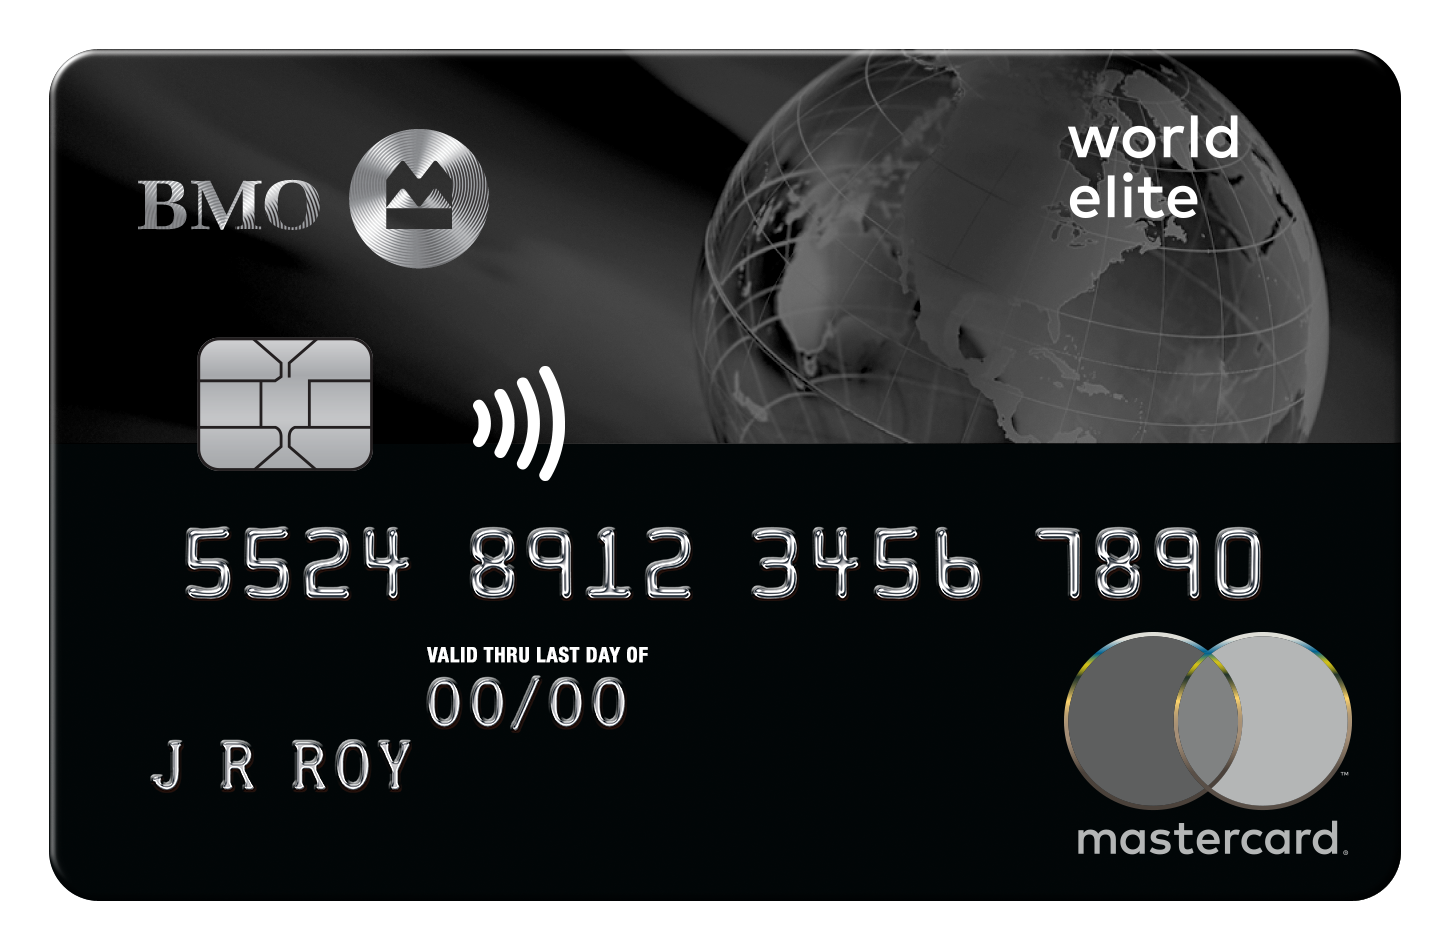 bmo world elite mastercard travel booking